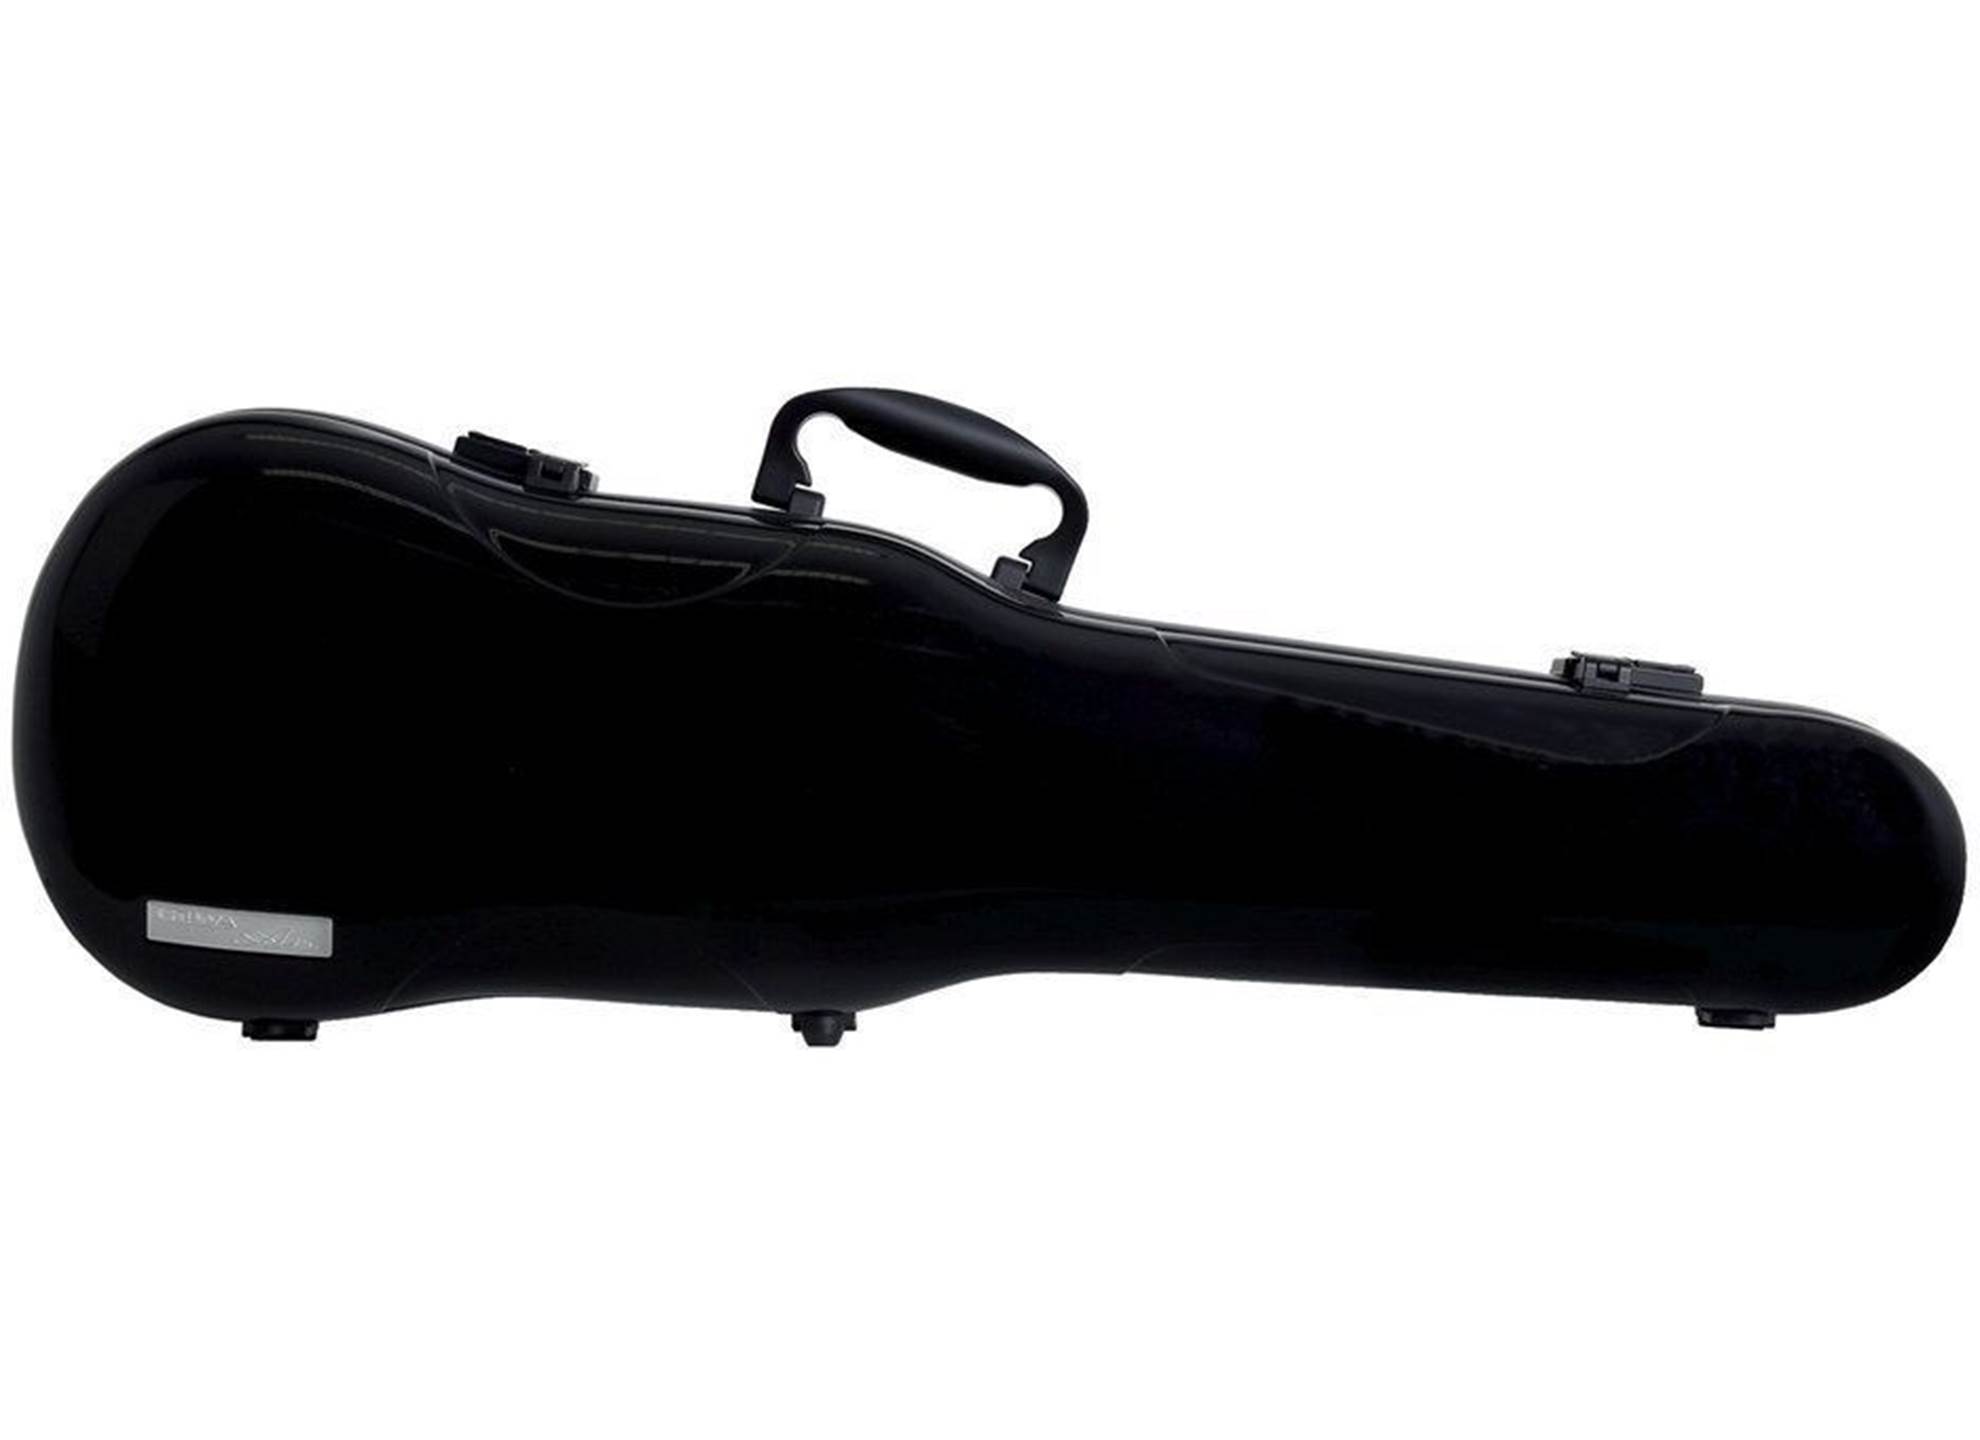 Form shaped violin cases Air 1.7 Black